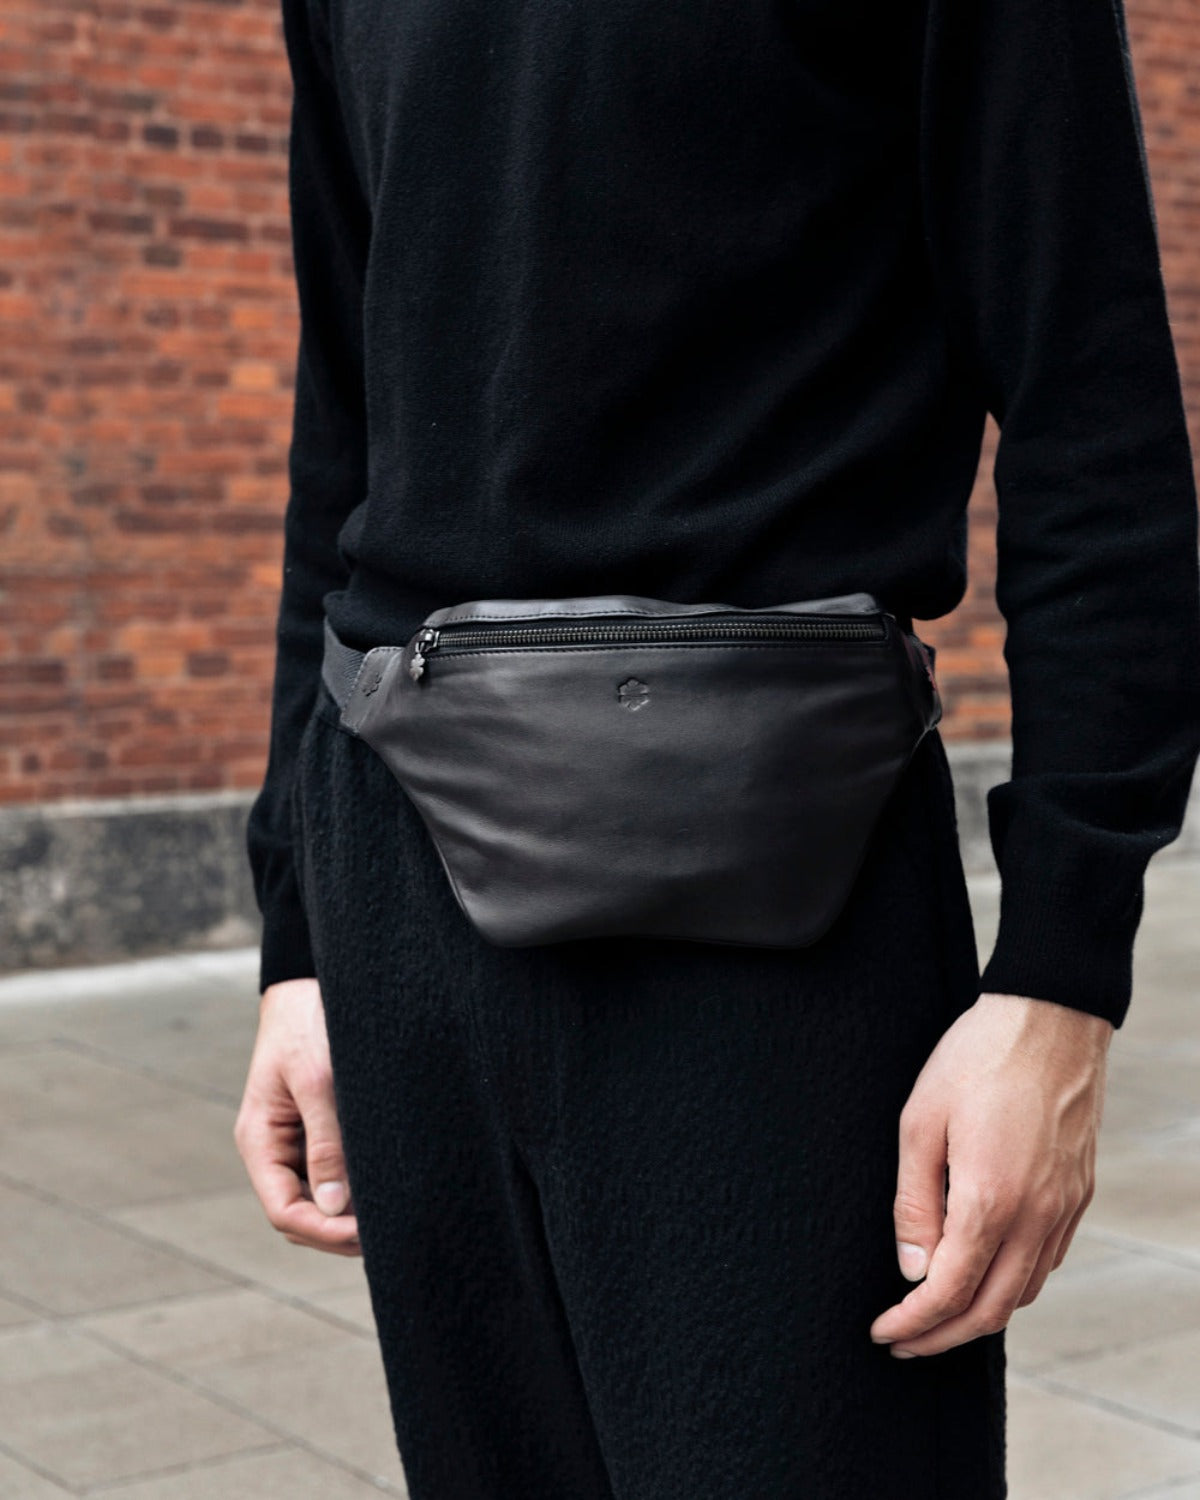 Women's Classic Leather Hip Bag Black